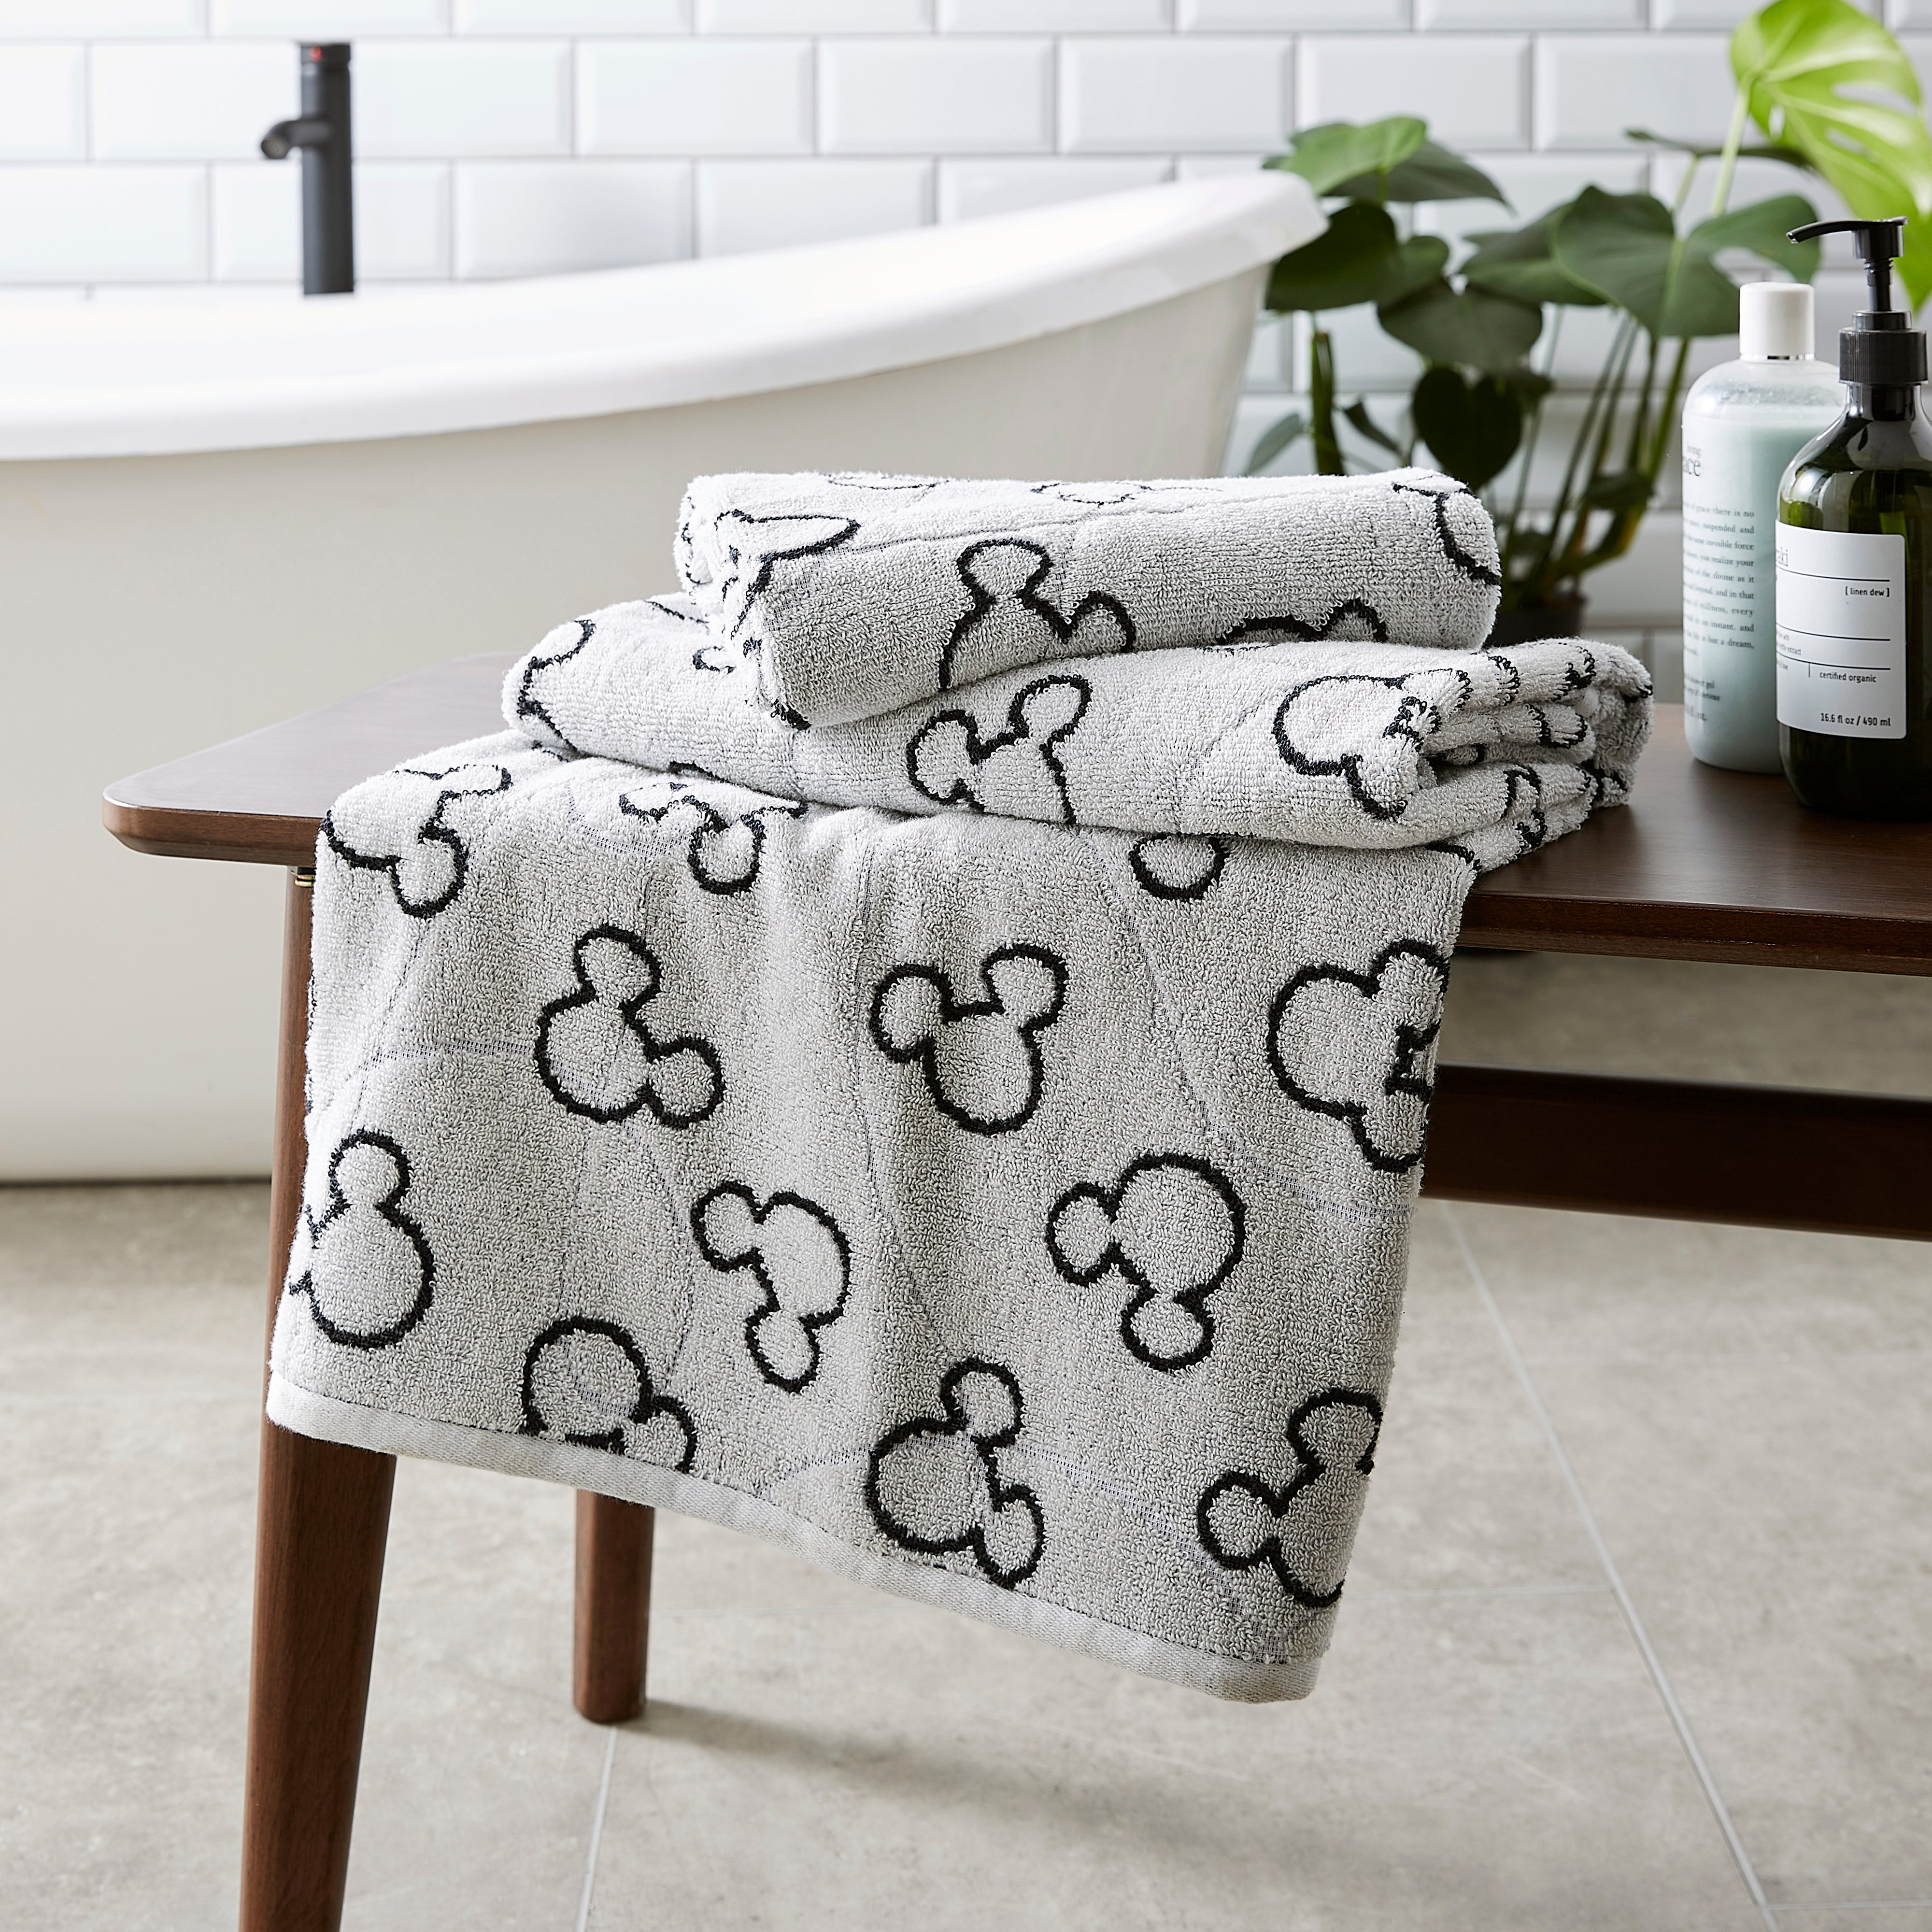 Disney Mickey Mouse Monochrome Jacquard Towel